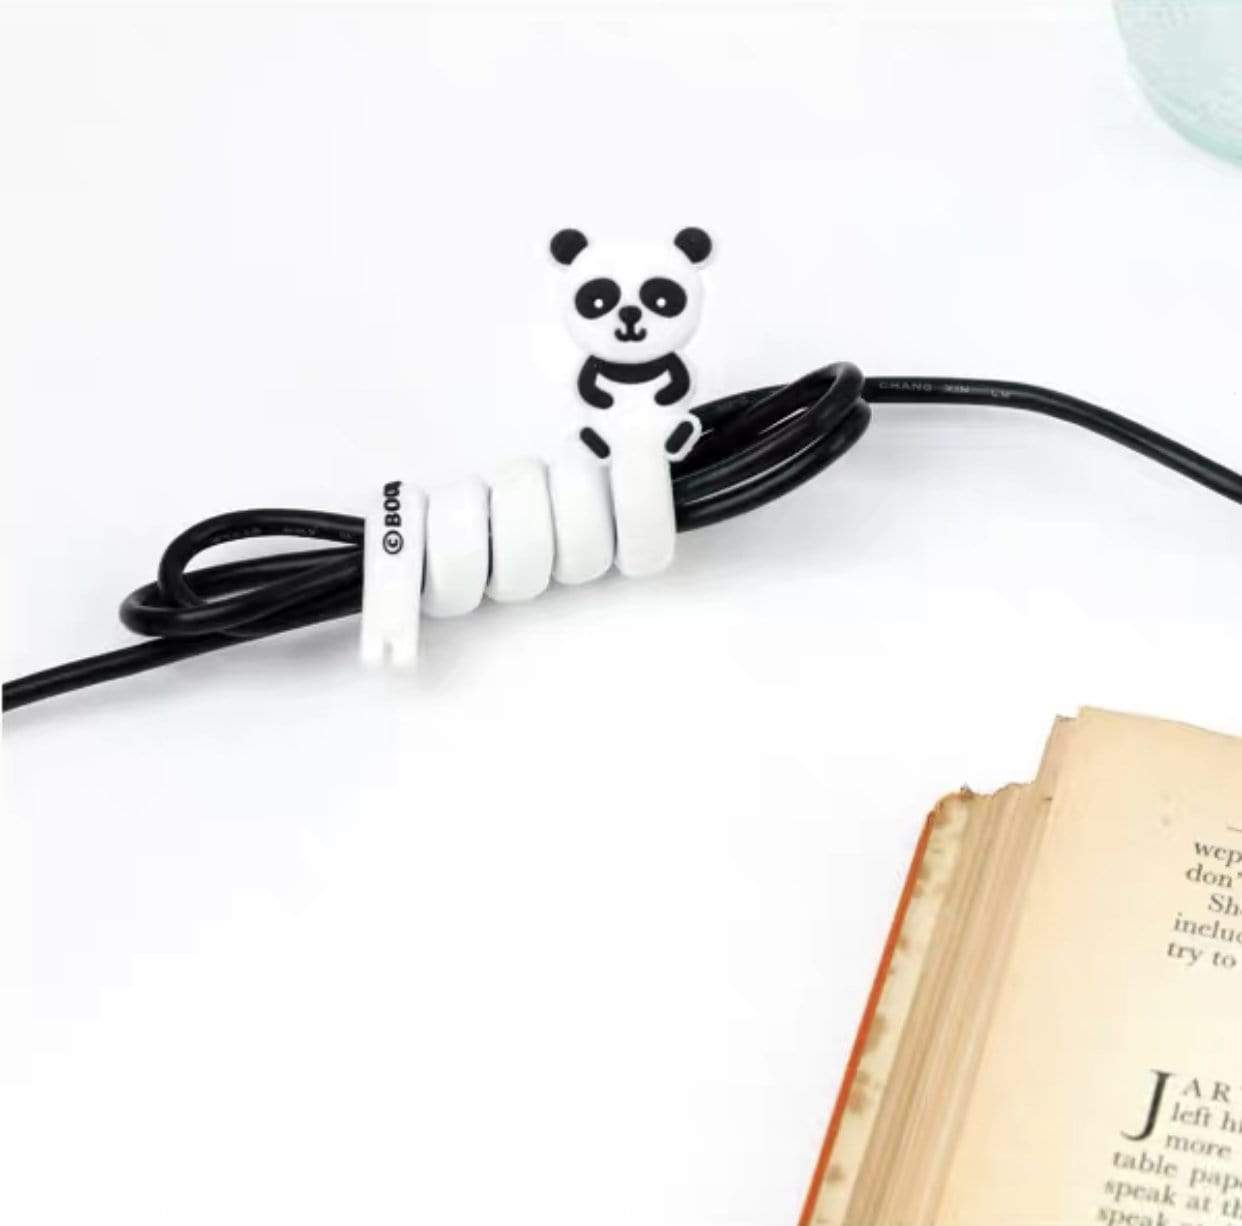 Helms Store Accessories Bookfriends Korea Animal Character Cable Organiser - Panda